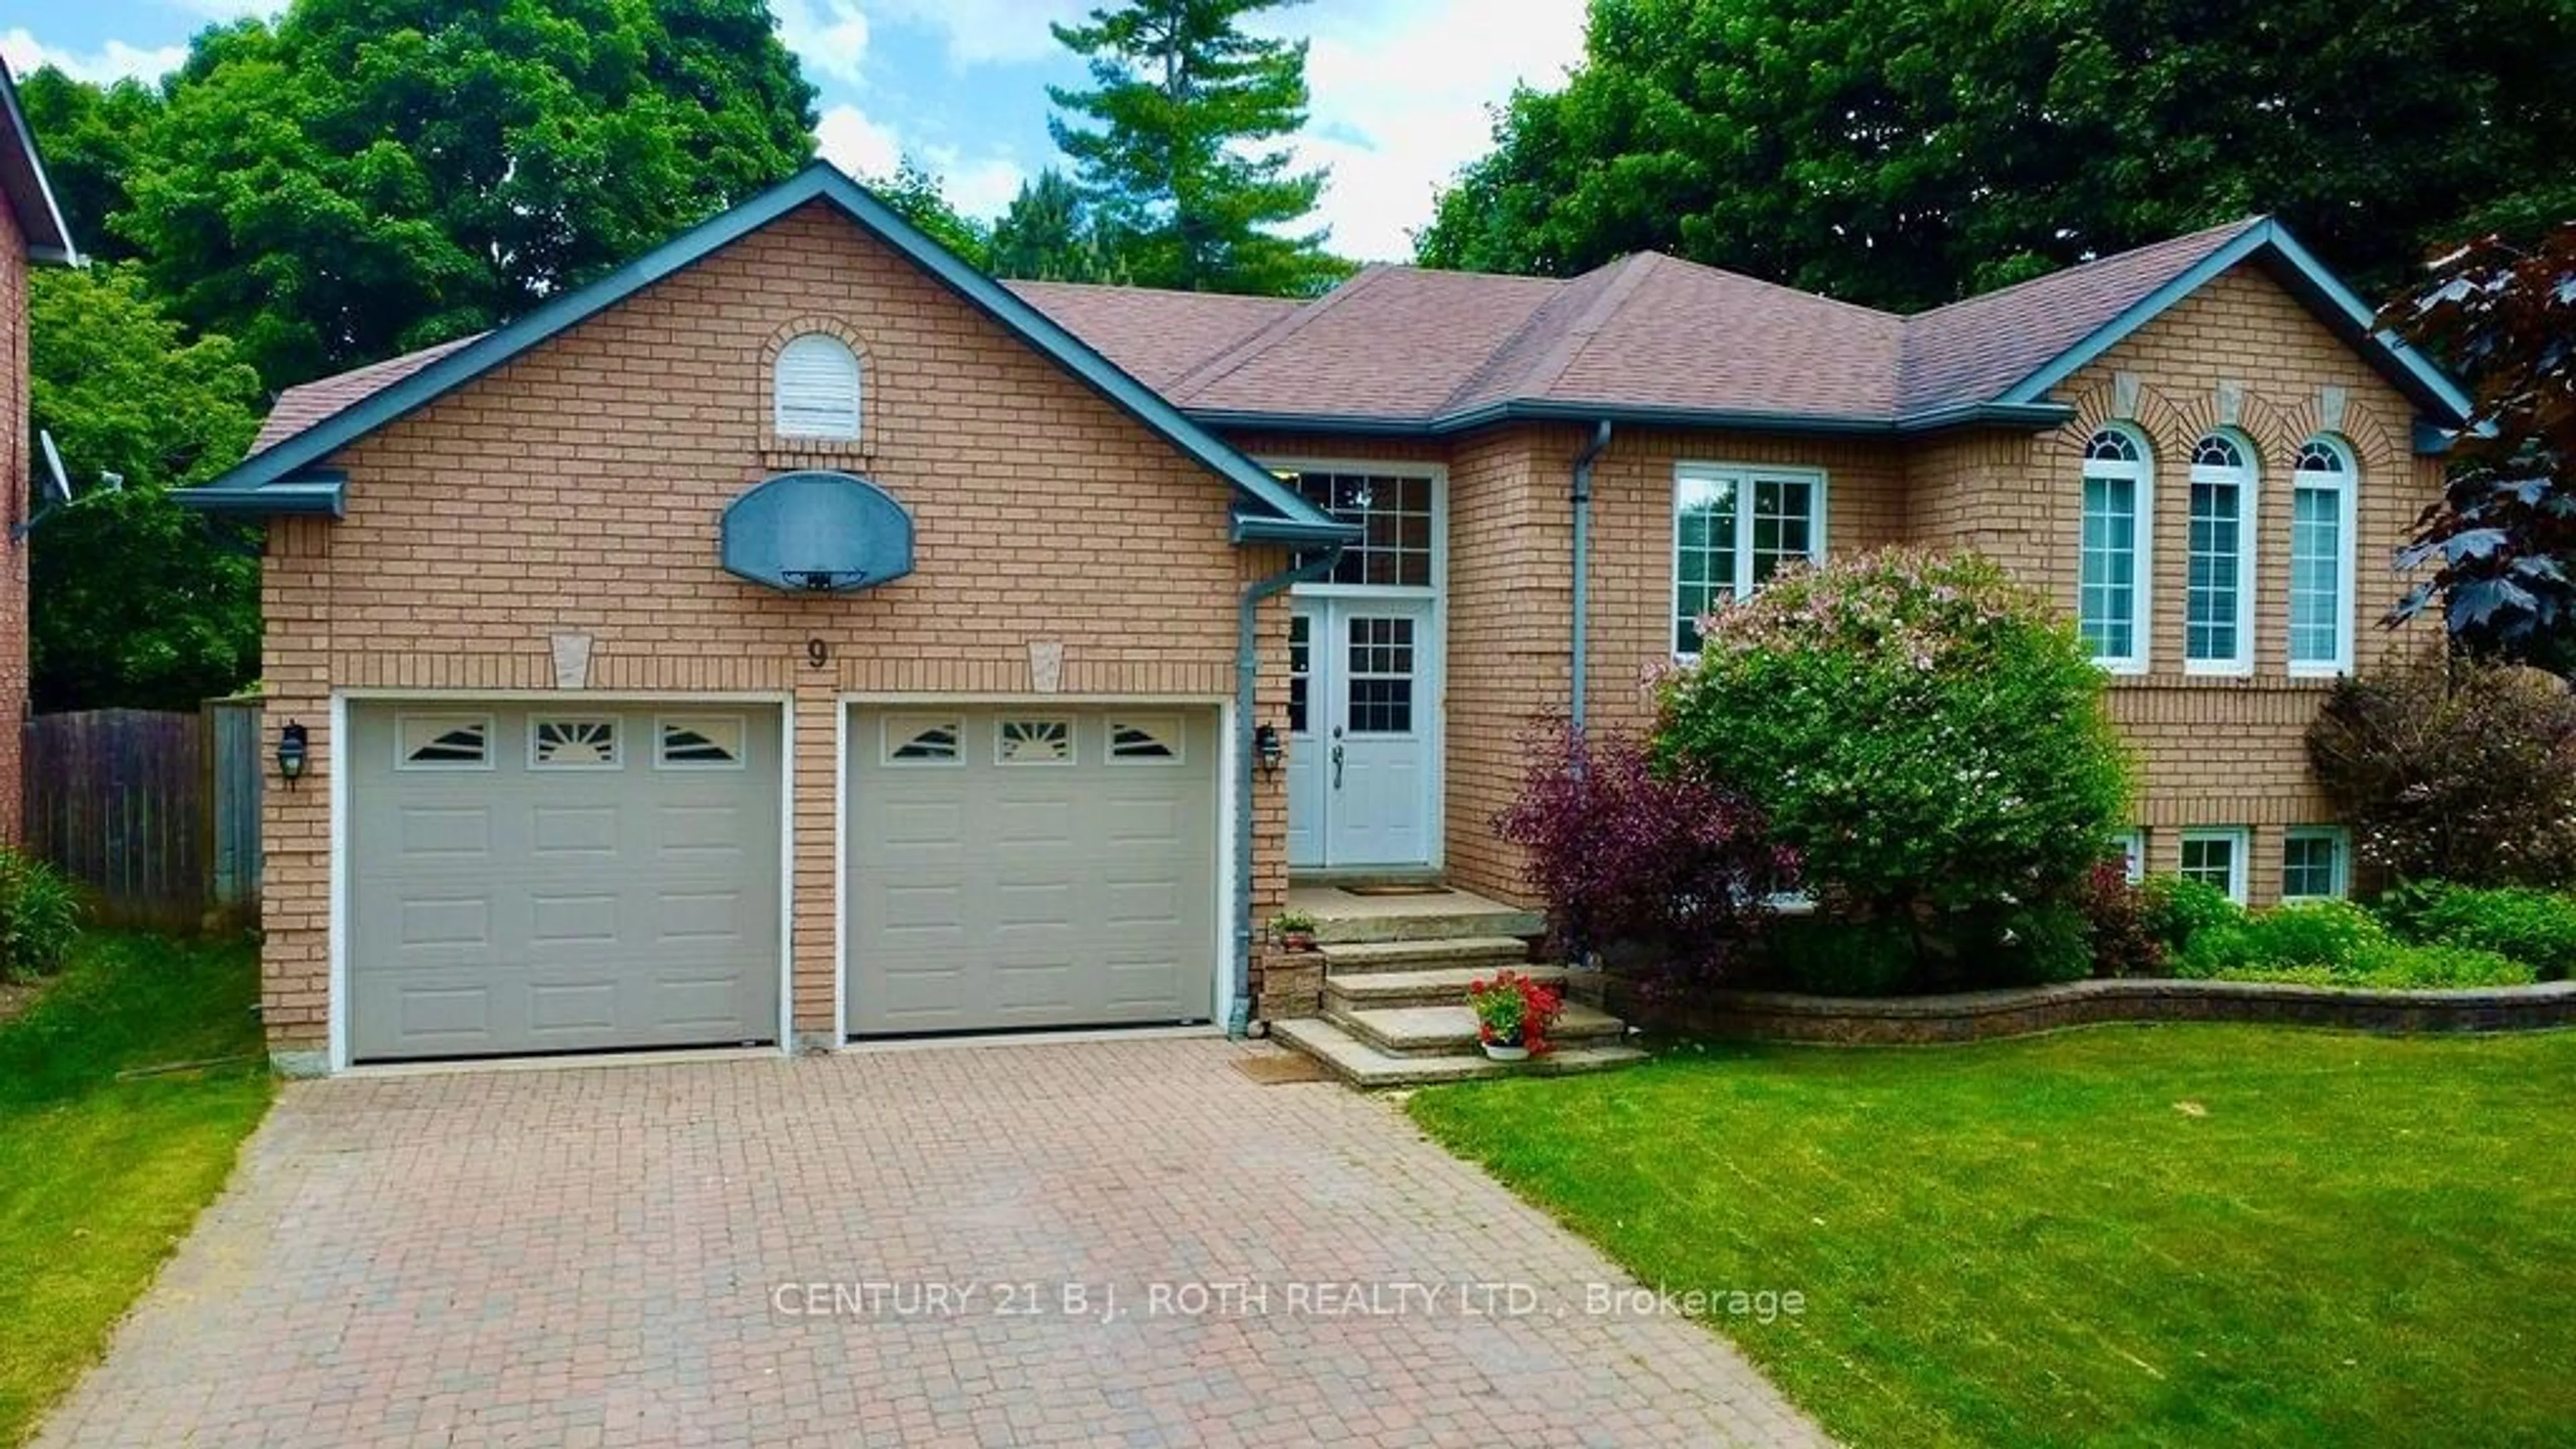 Home with brick exterior material for 9 ASHTON St, Orillia Ontario L3V 7V5